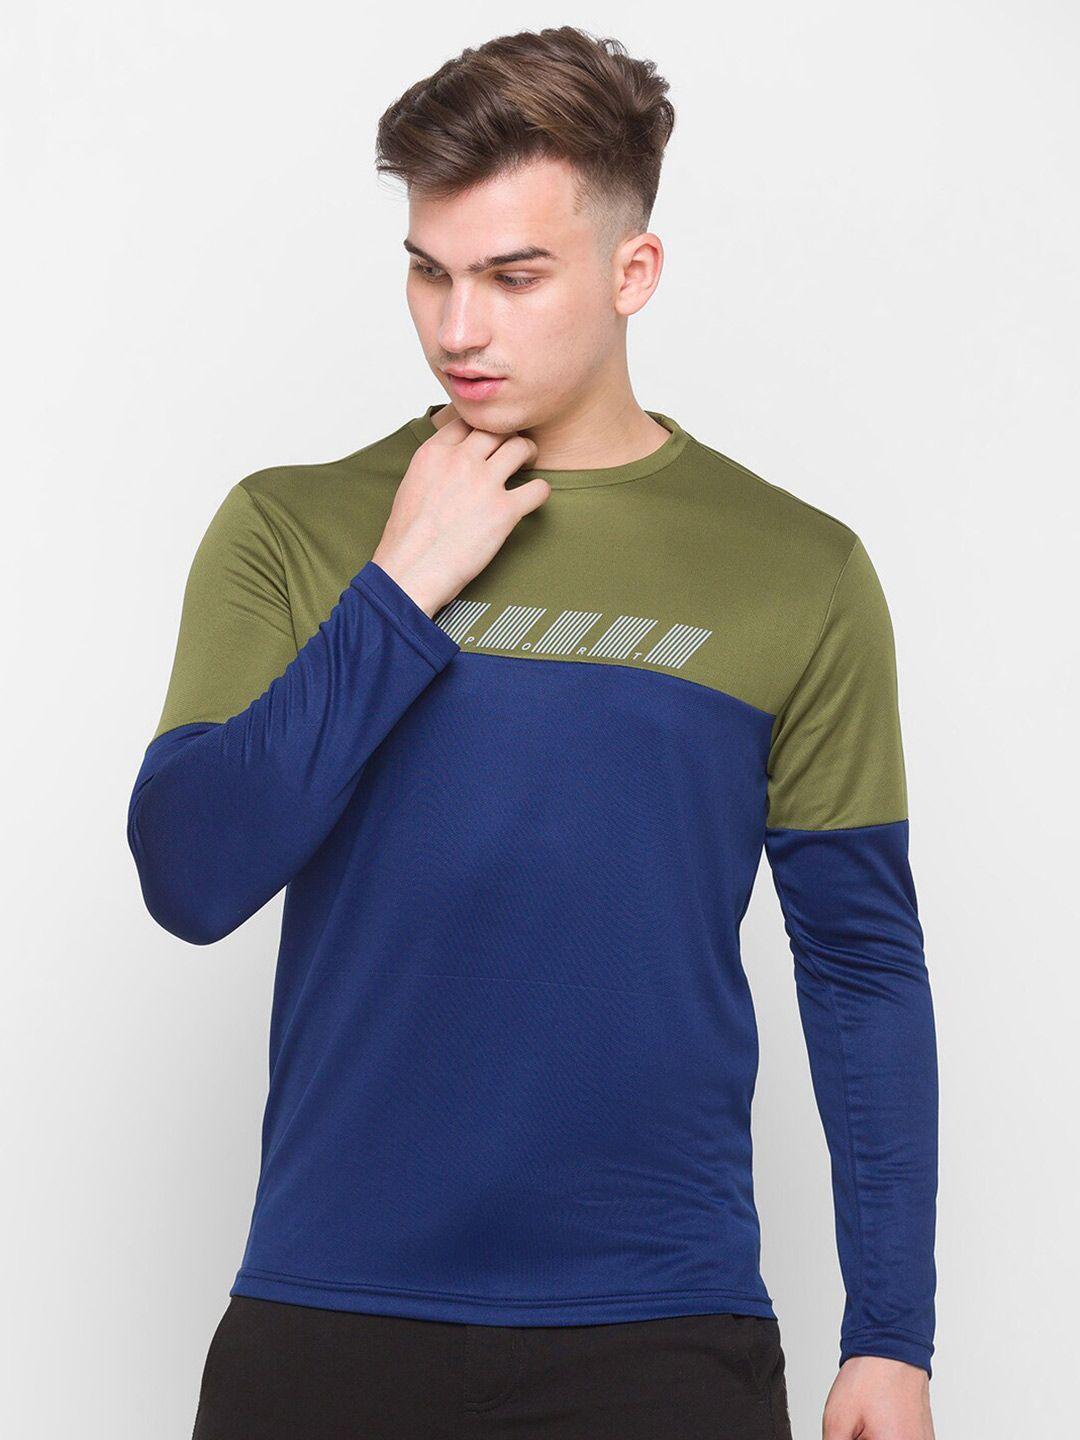 globus men olive green & blue colourblocked slim fit t-shirt